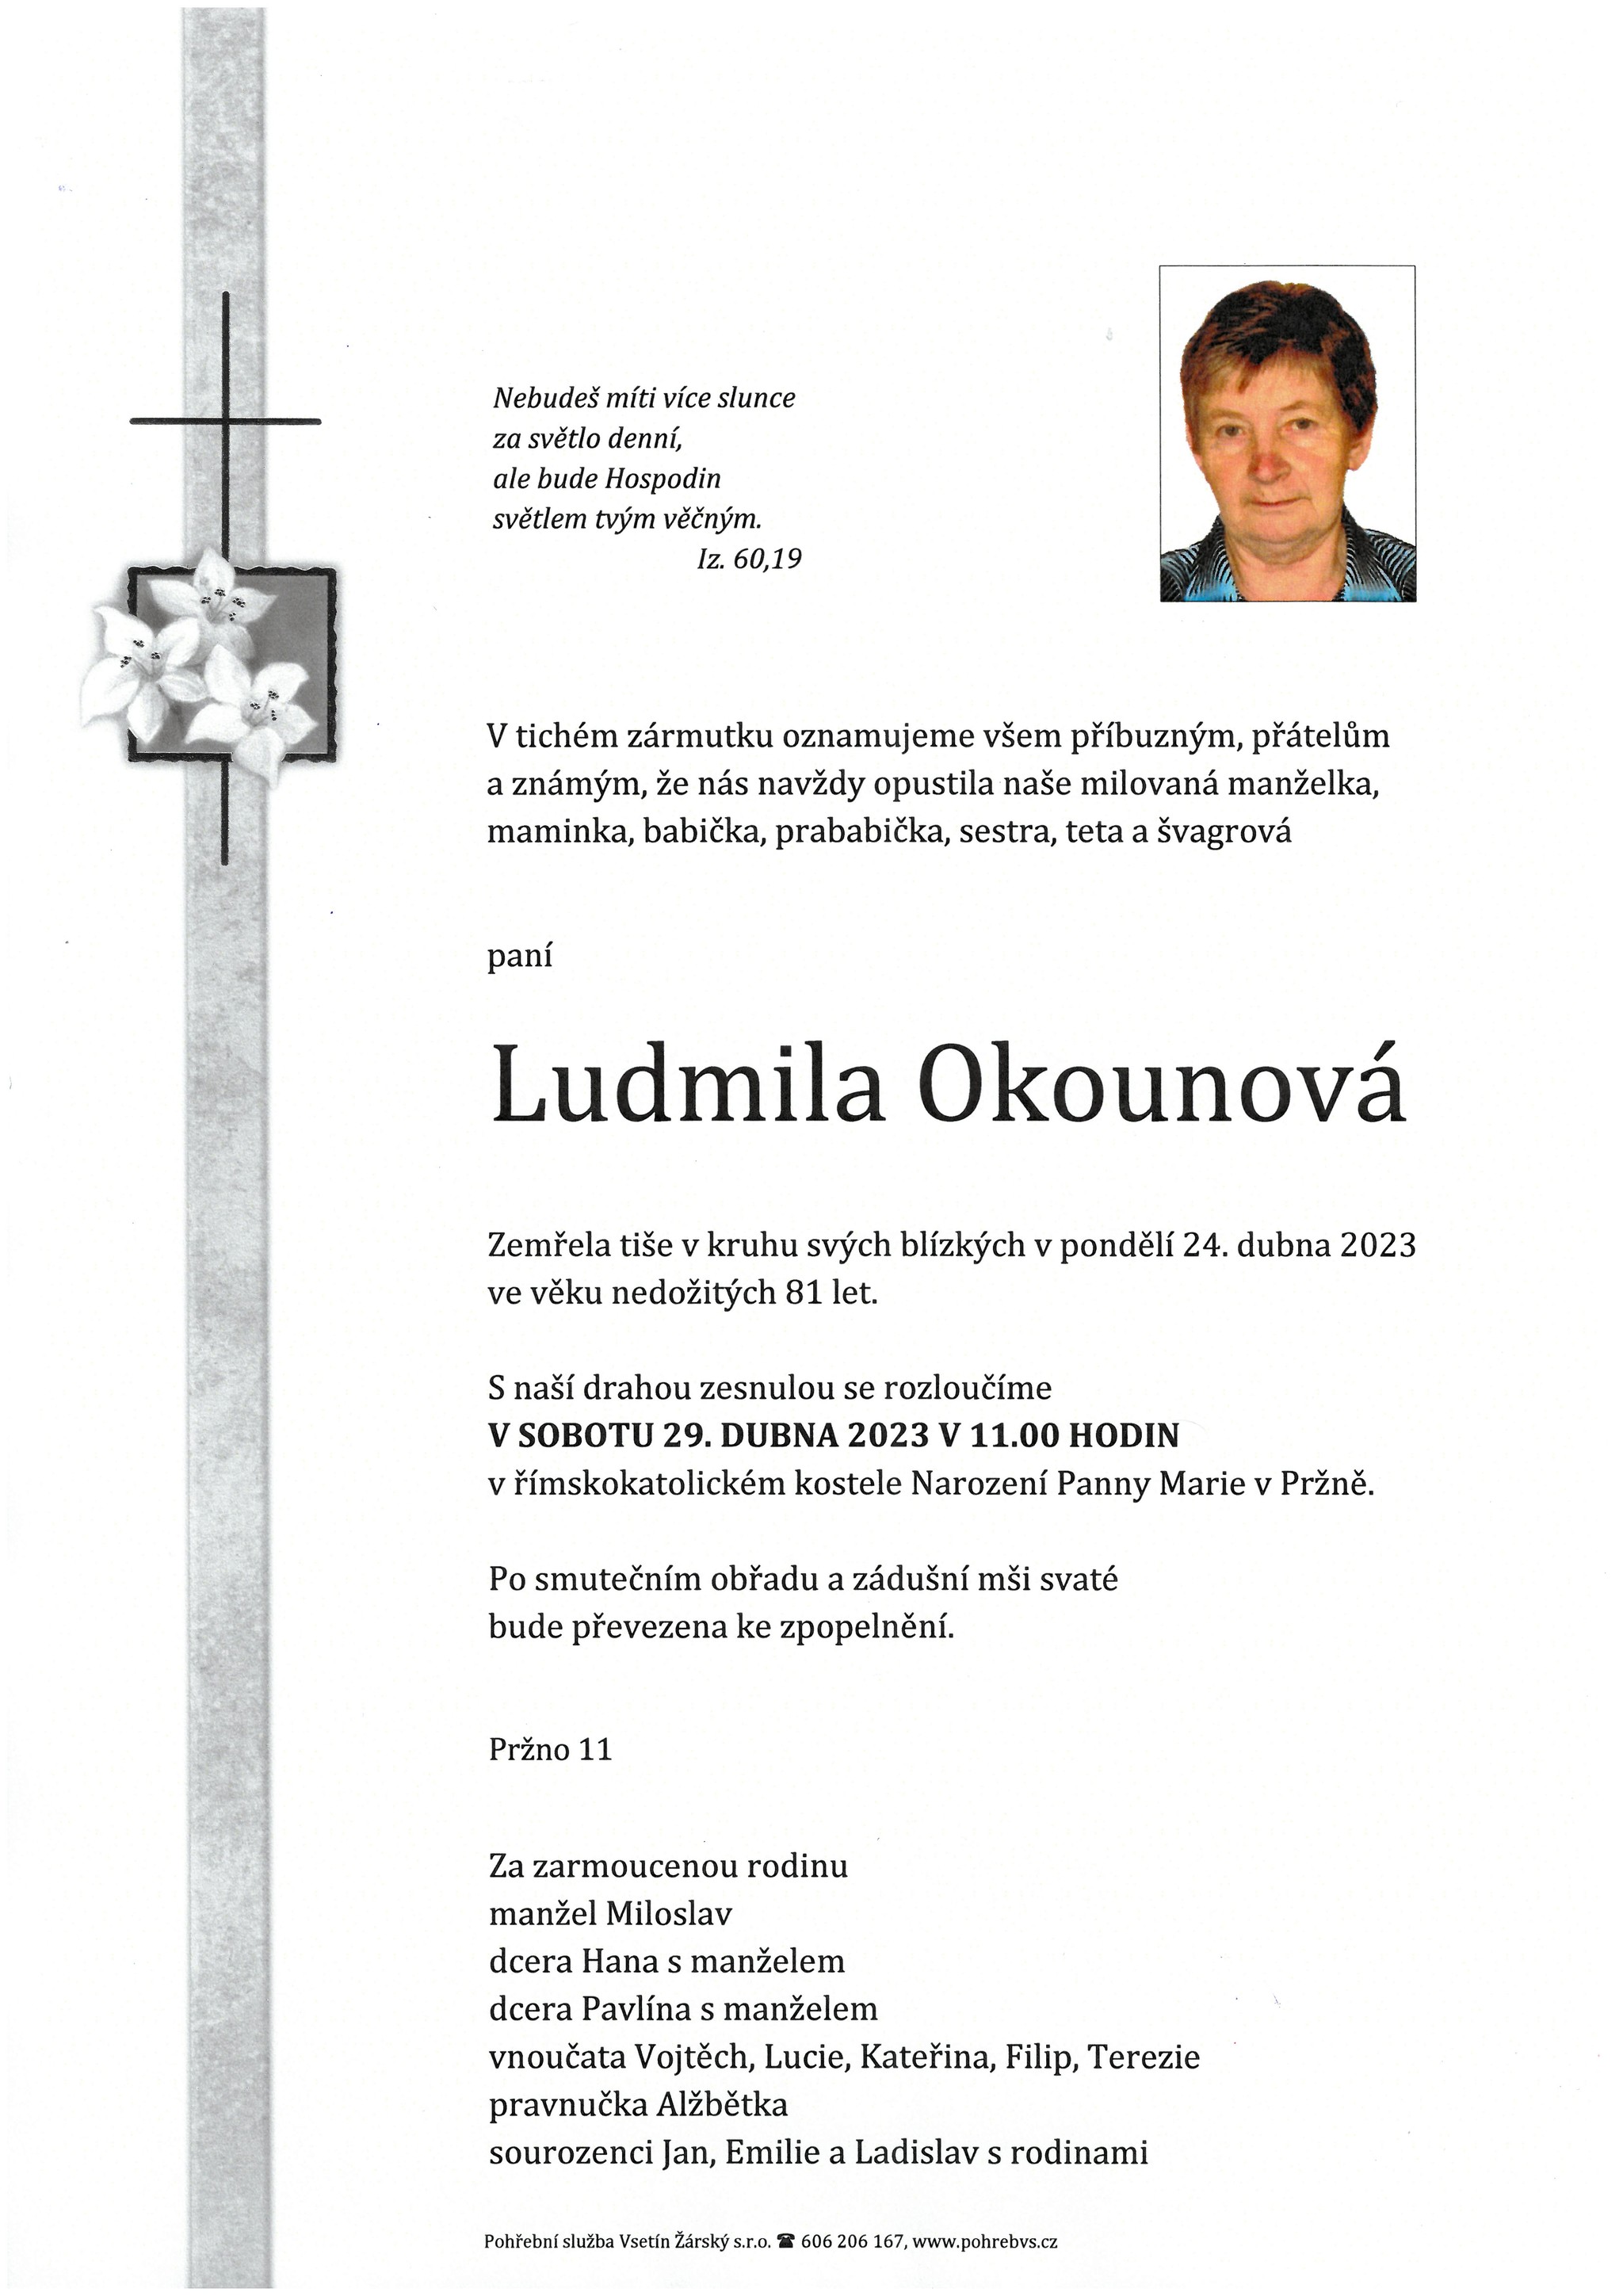 Ludmila Okounová